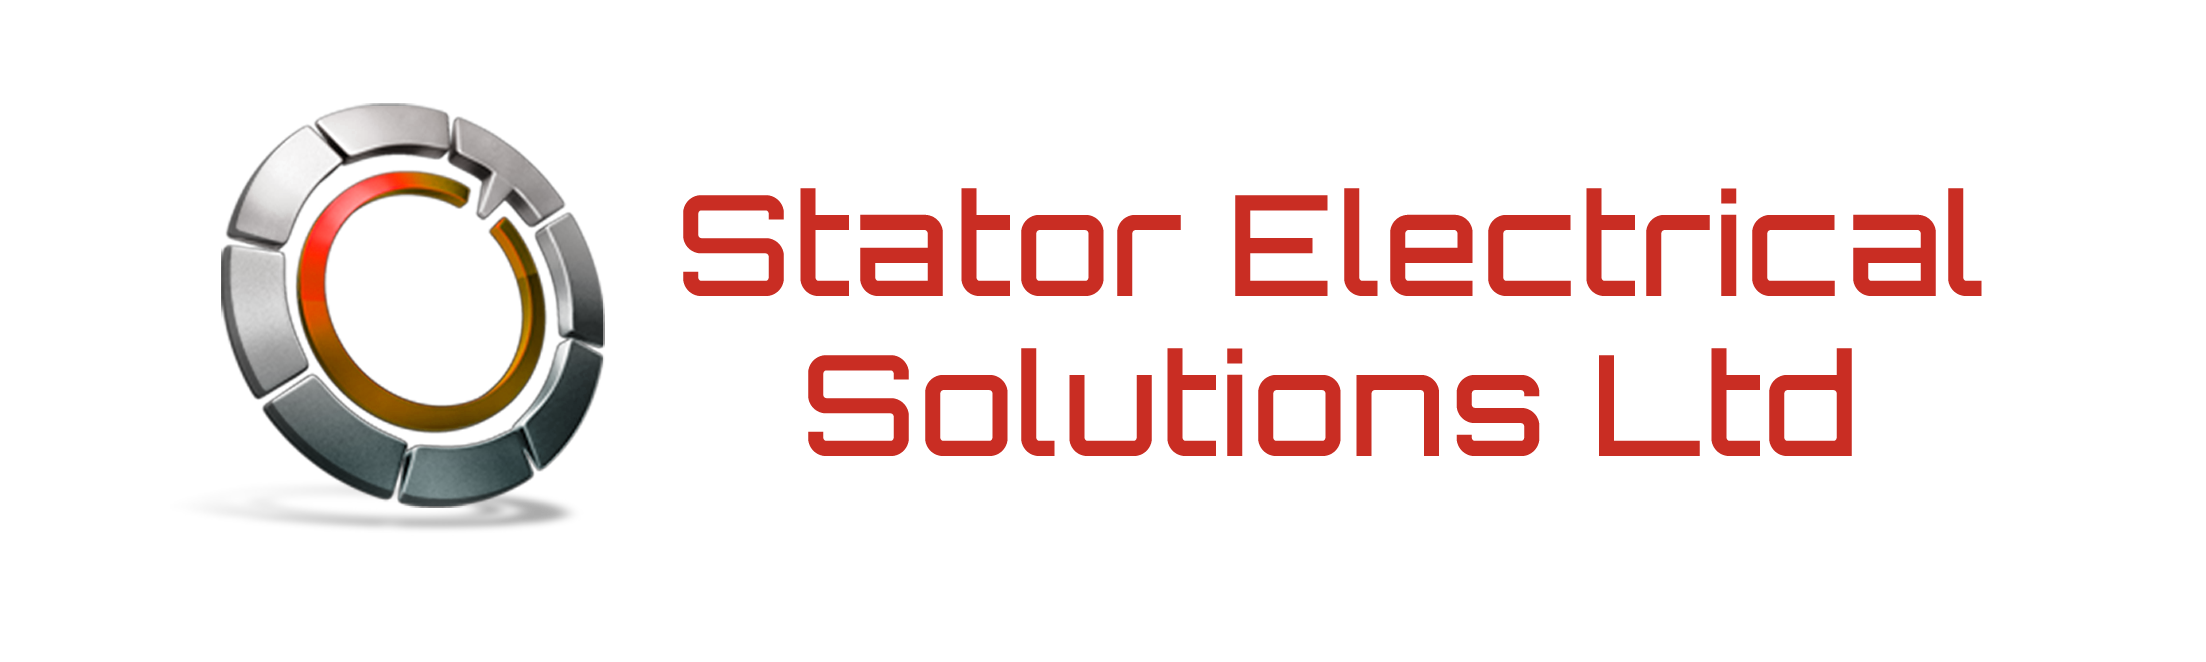 Stator Electrical Solutions Ltd